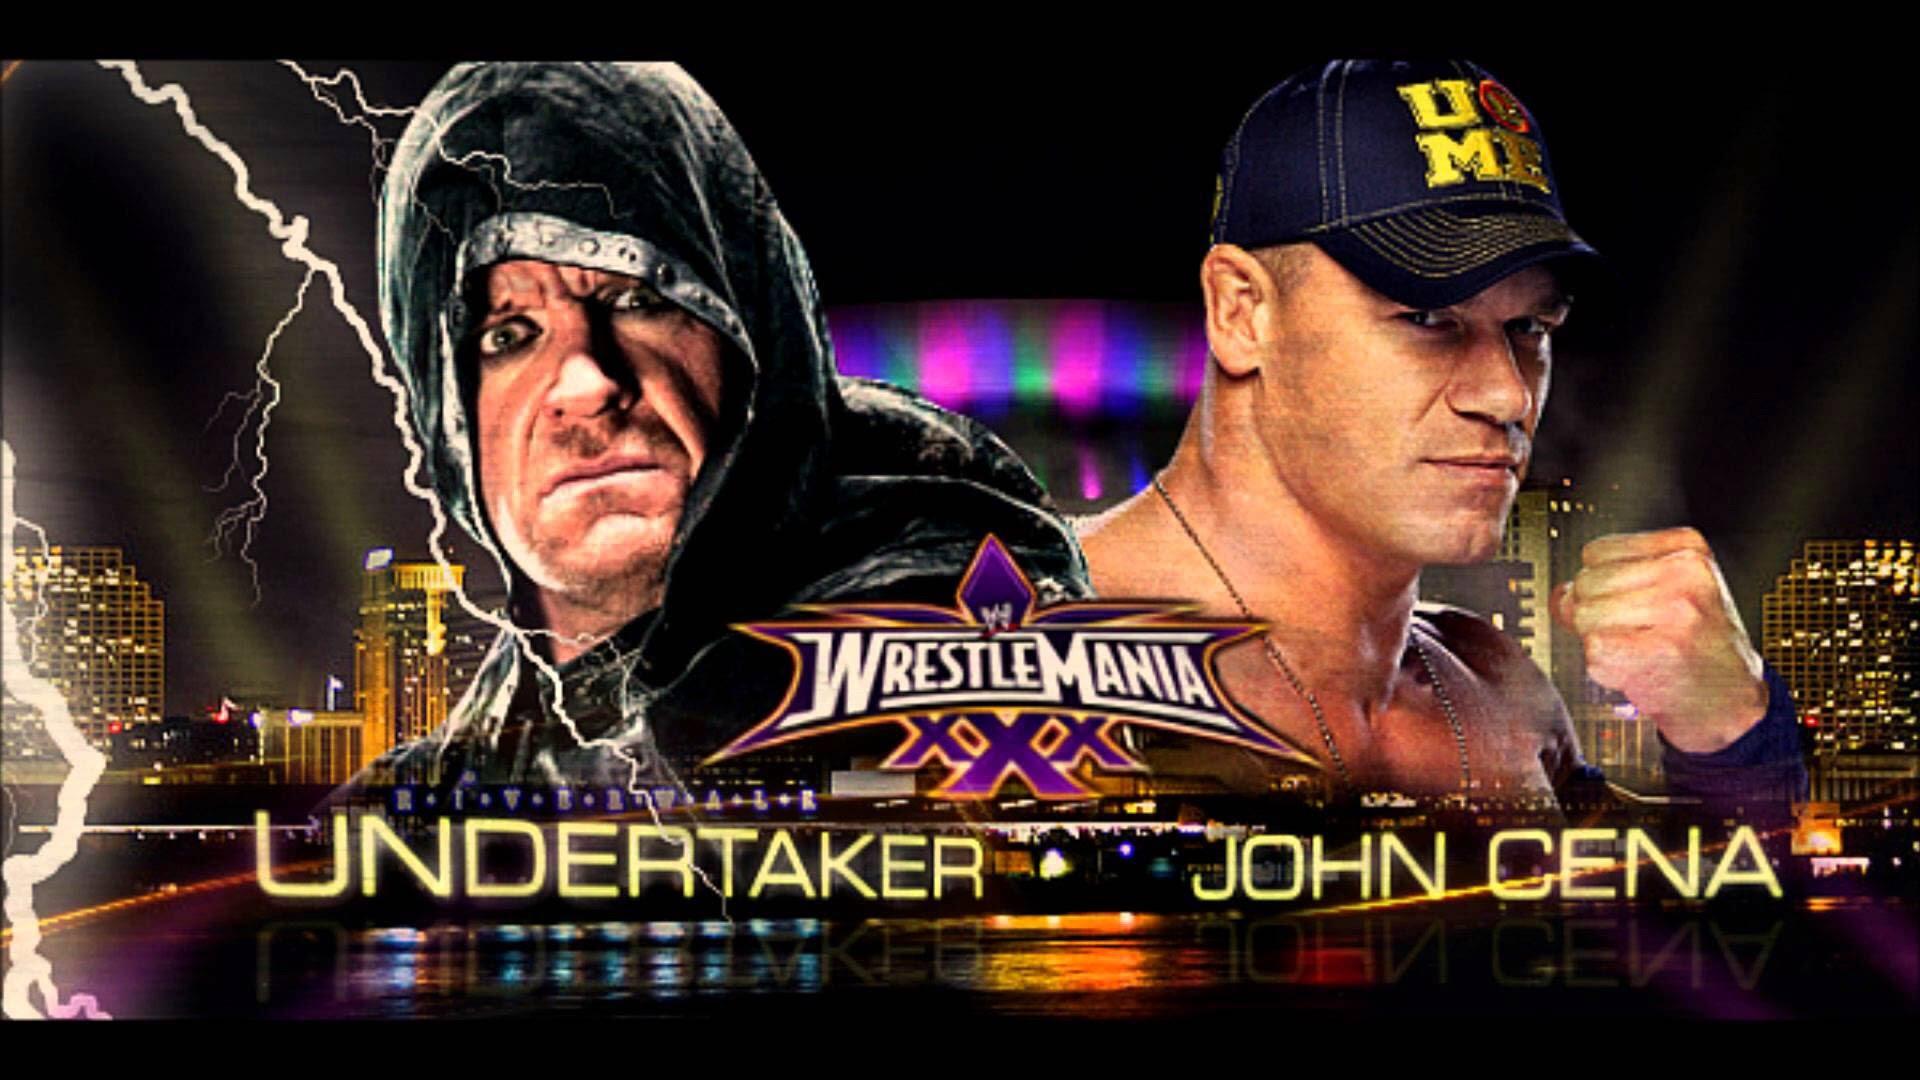 Is Wrestlemania fooling us with encounter of John Cena vs